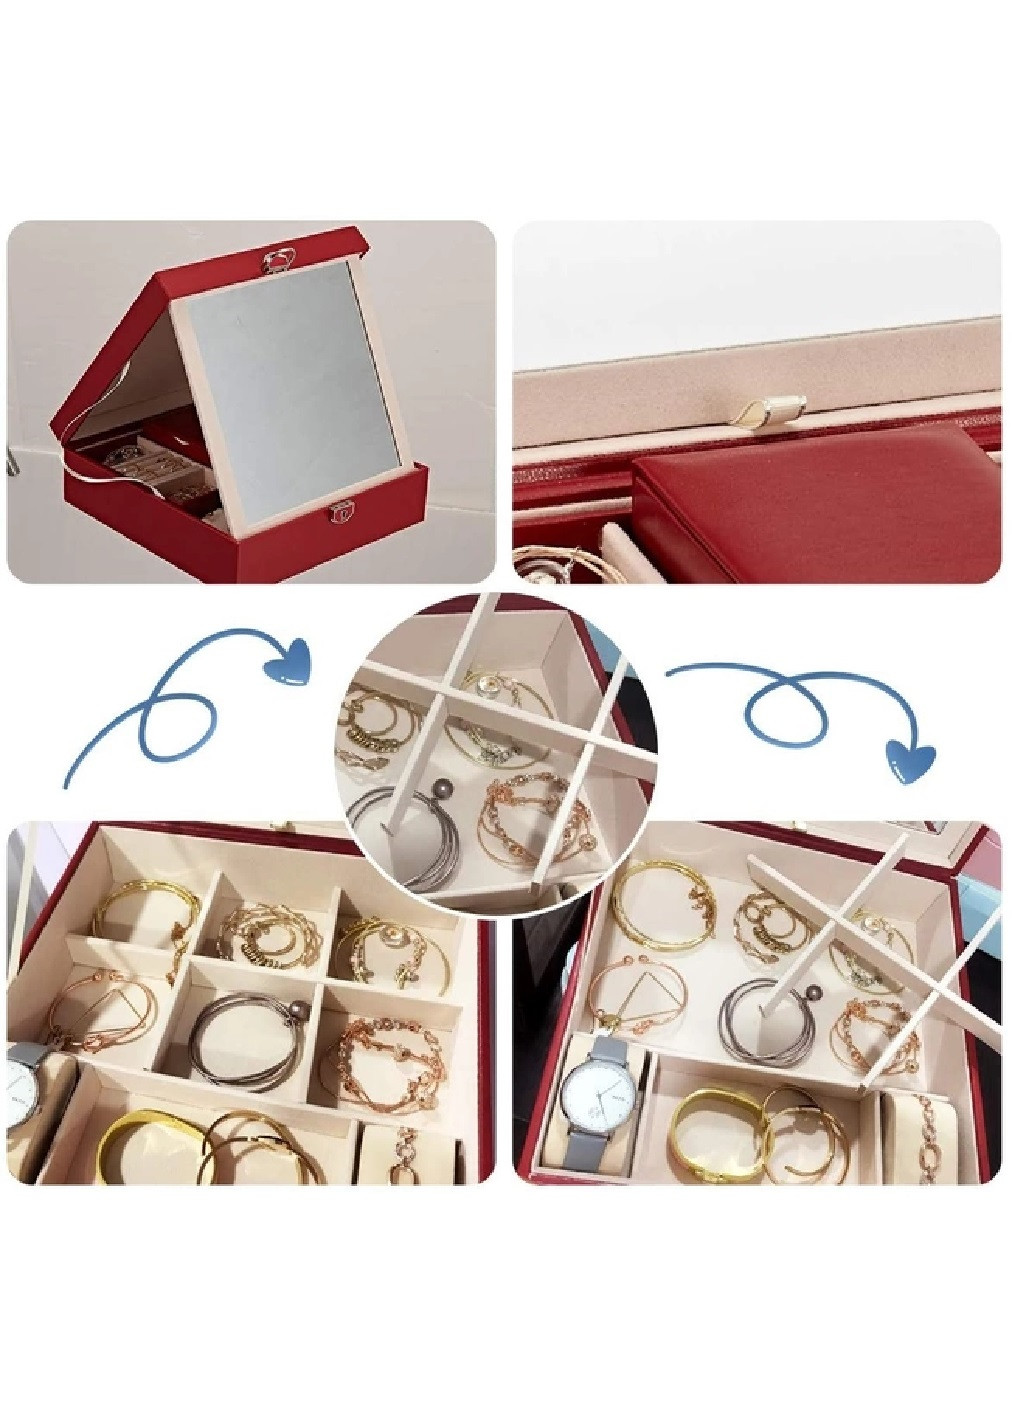 Шкатулка сундук органайзер коробка футляр для хранения украшений бижутерии 25.5х25.5х9 см (474653-Prob) Красная Unbranded (259207721)